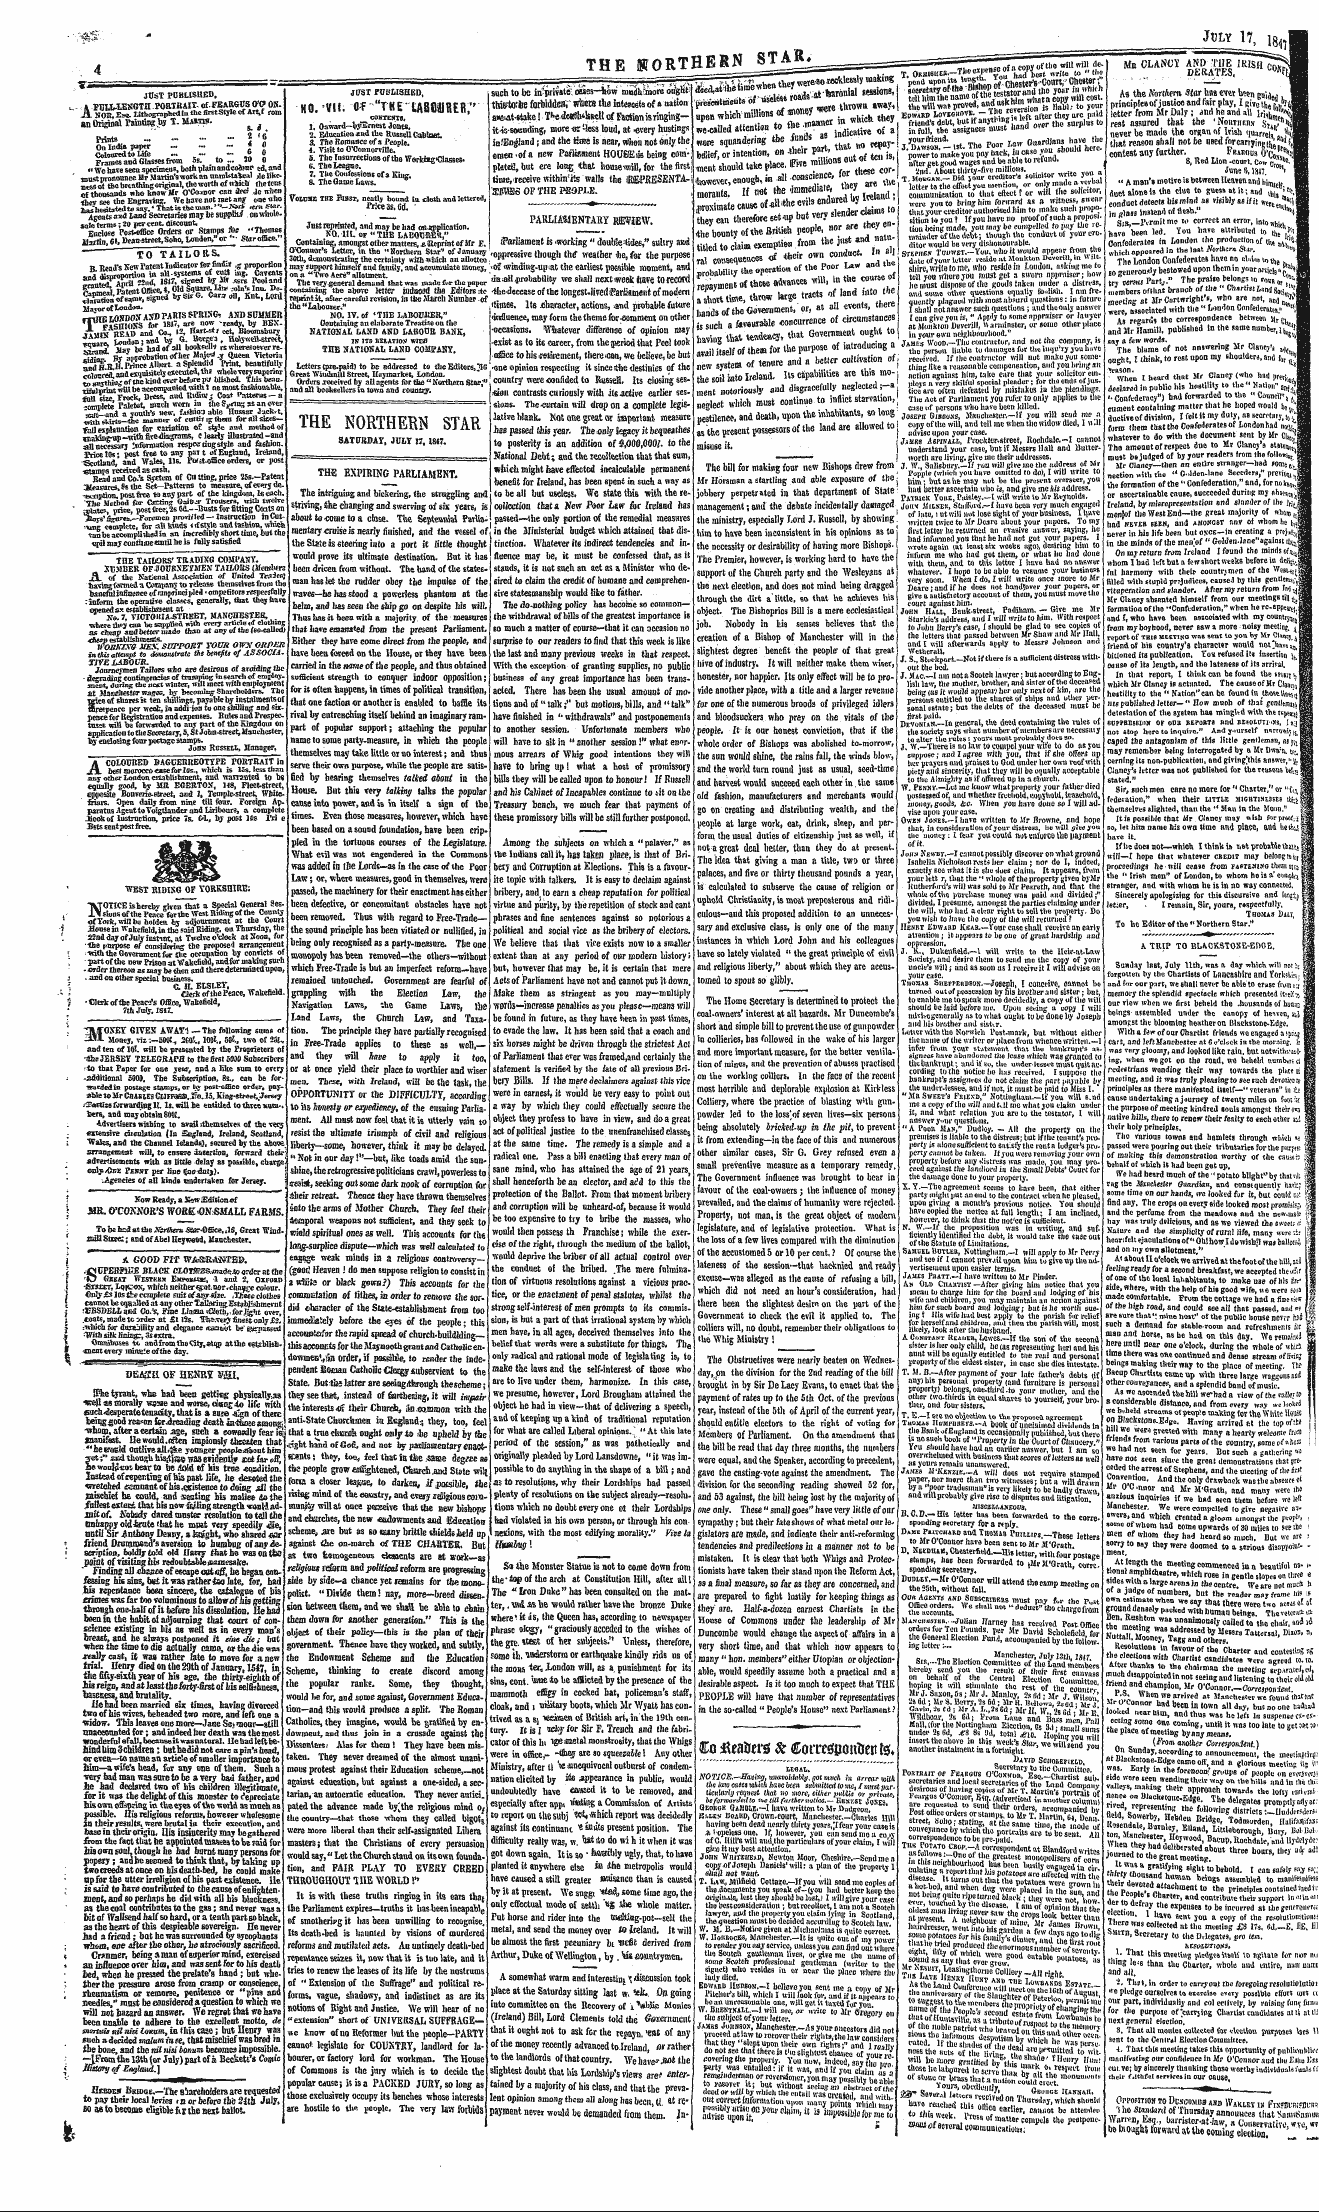 Northern Star (1837-1852): jS F Y, 3rd edition - , Mb Clancy Ani>^1e Irish Cr^ Aa The A'O...